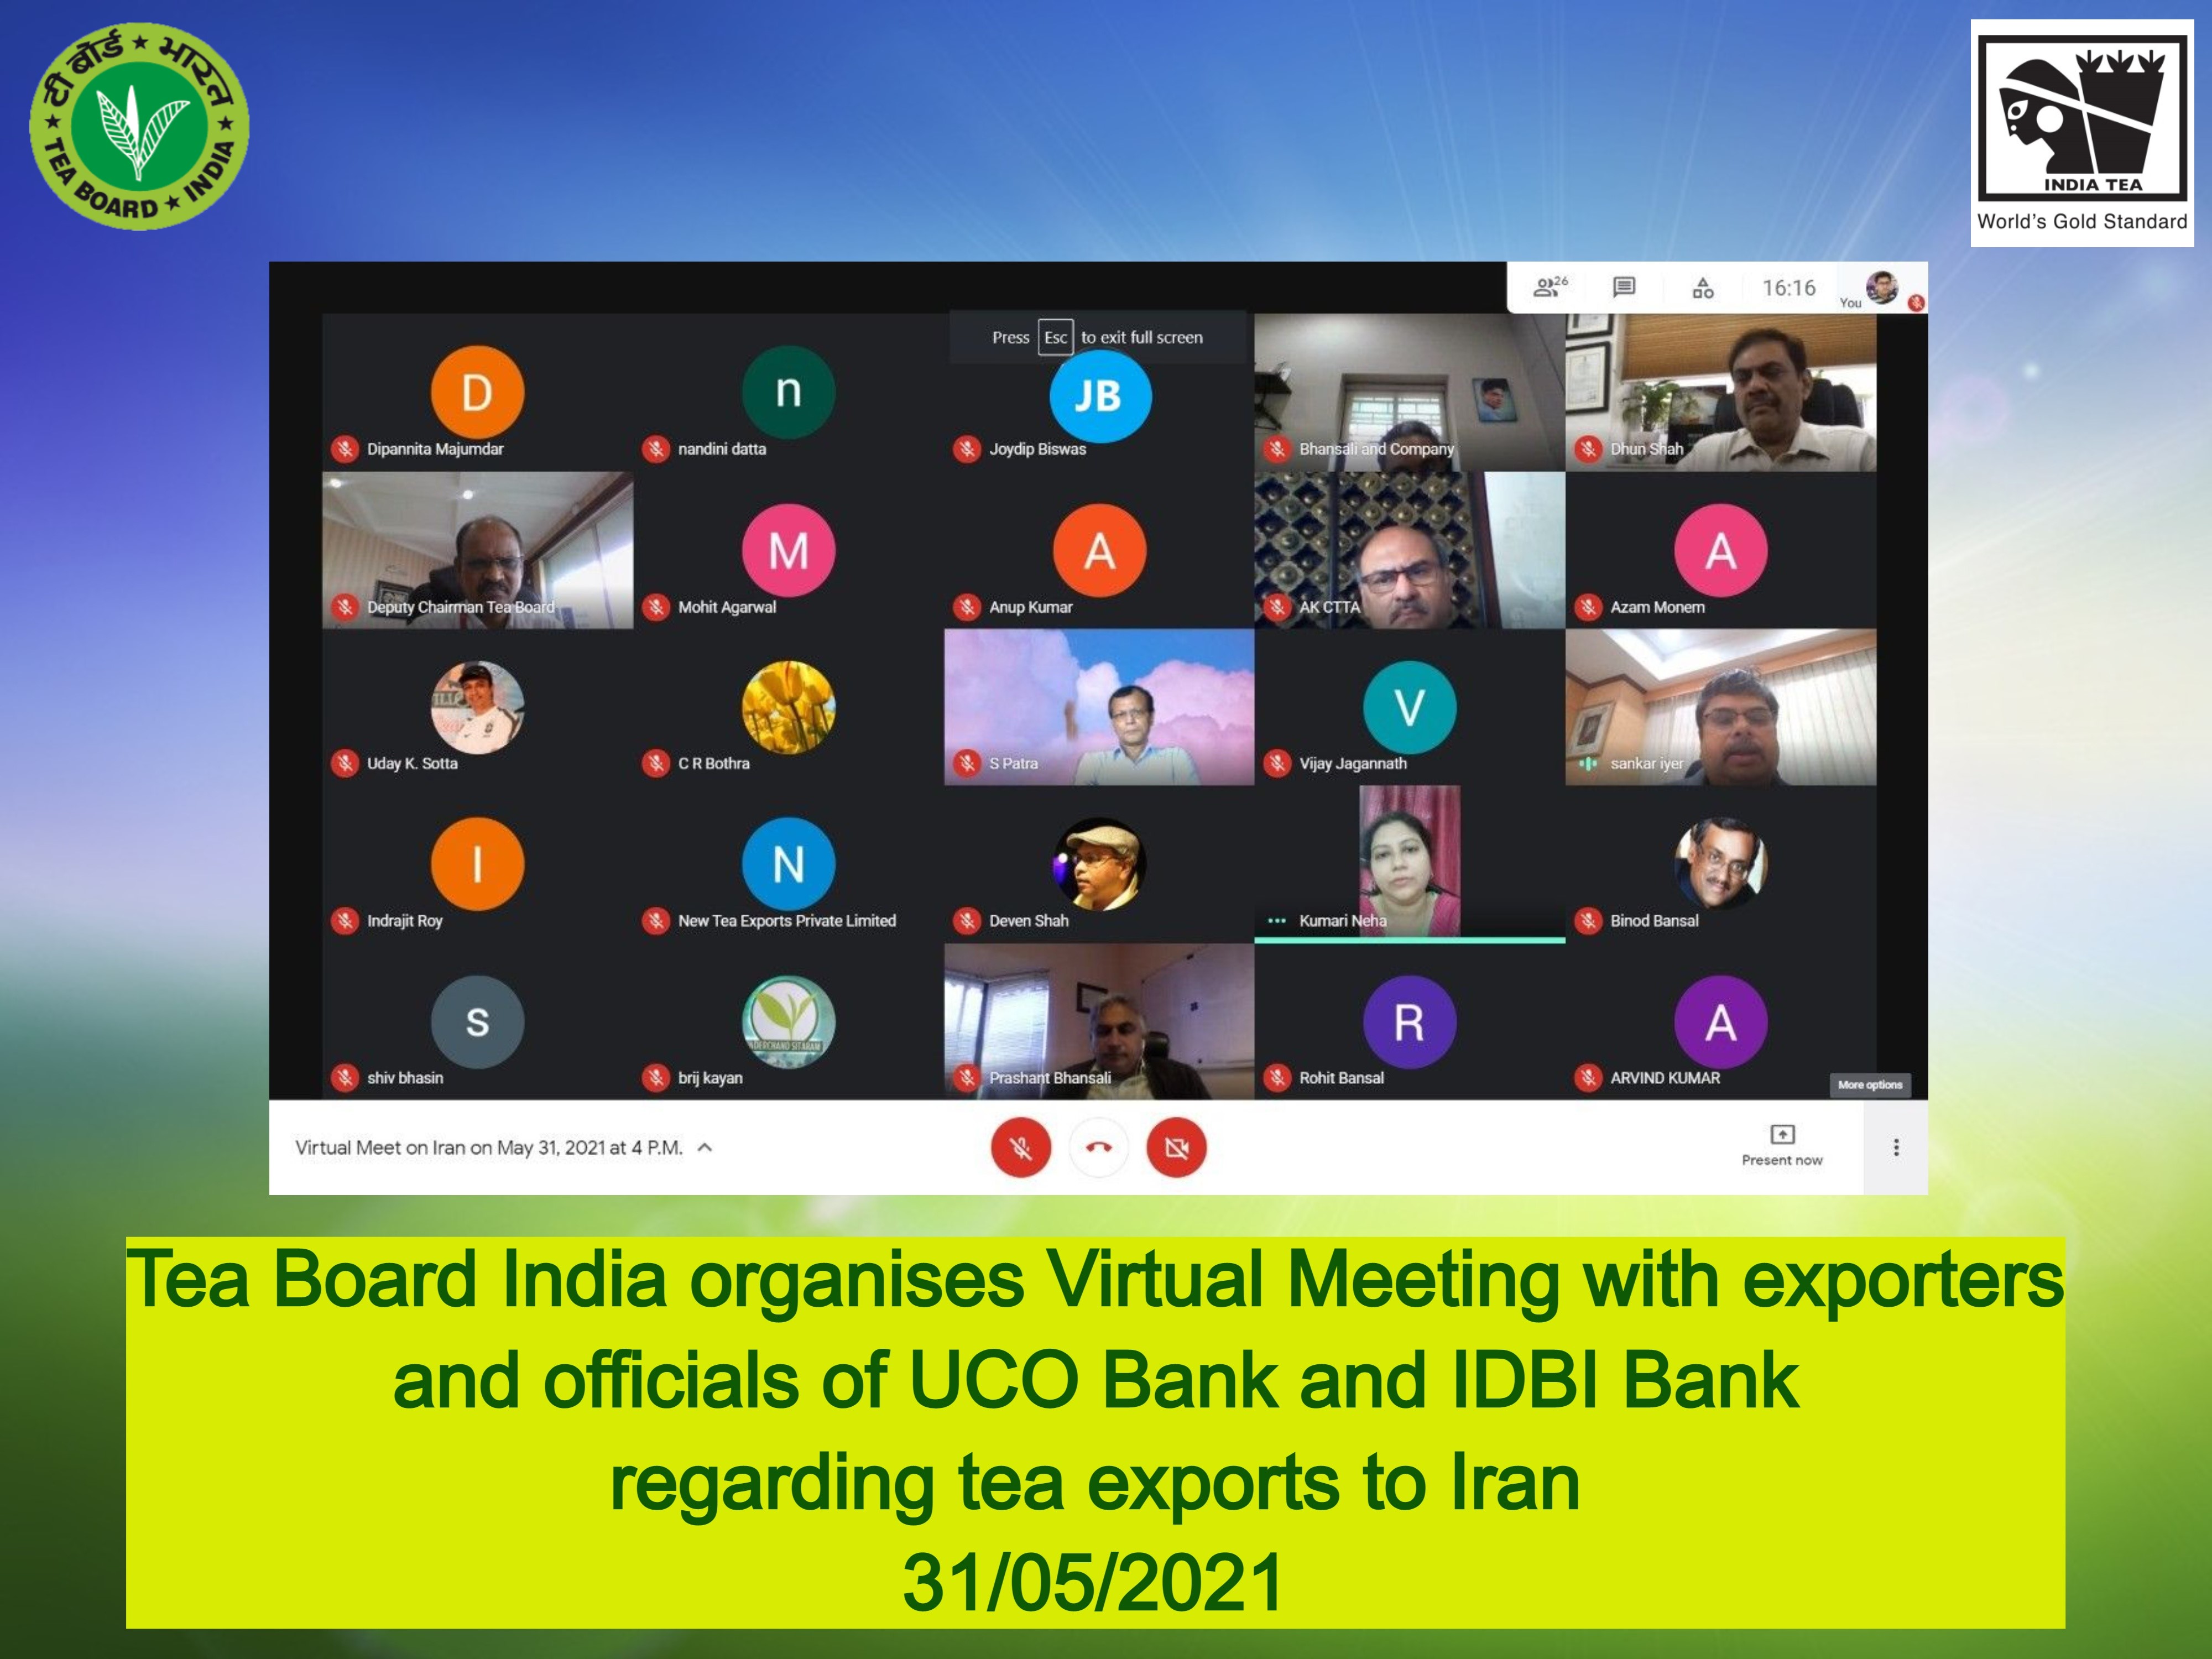 Tea Board India organizes Virtual Meeting with exporters and officials of UCO Bank and IDBI Bank regarding tea exports to Iran 31/05/2021